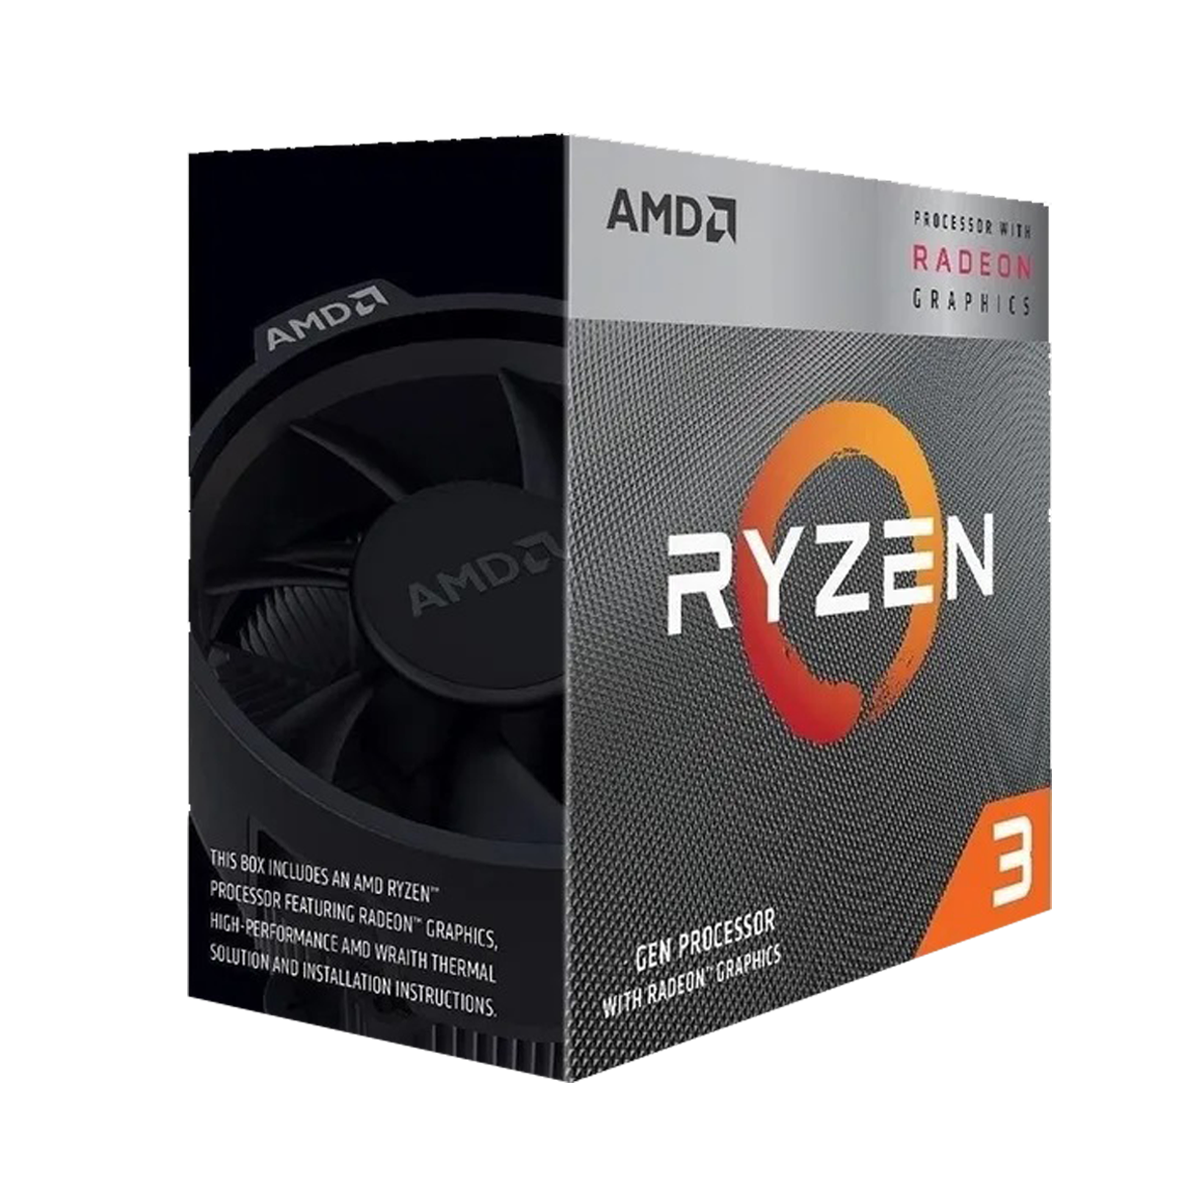 PC Gamer Vibox I-15 - Quad Core AMD Ryzen 3200G - Radeon Vega 8